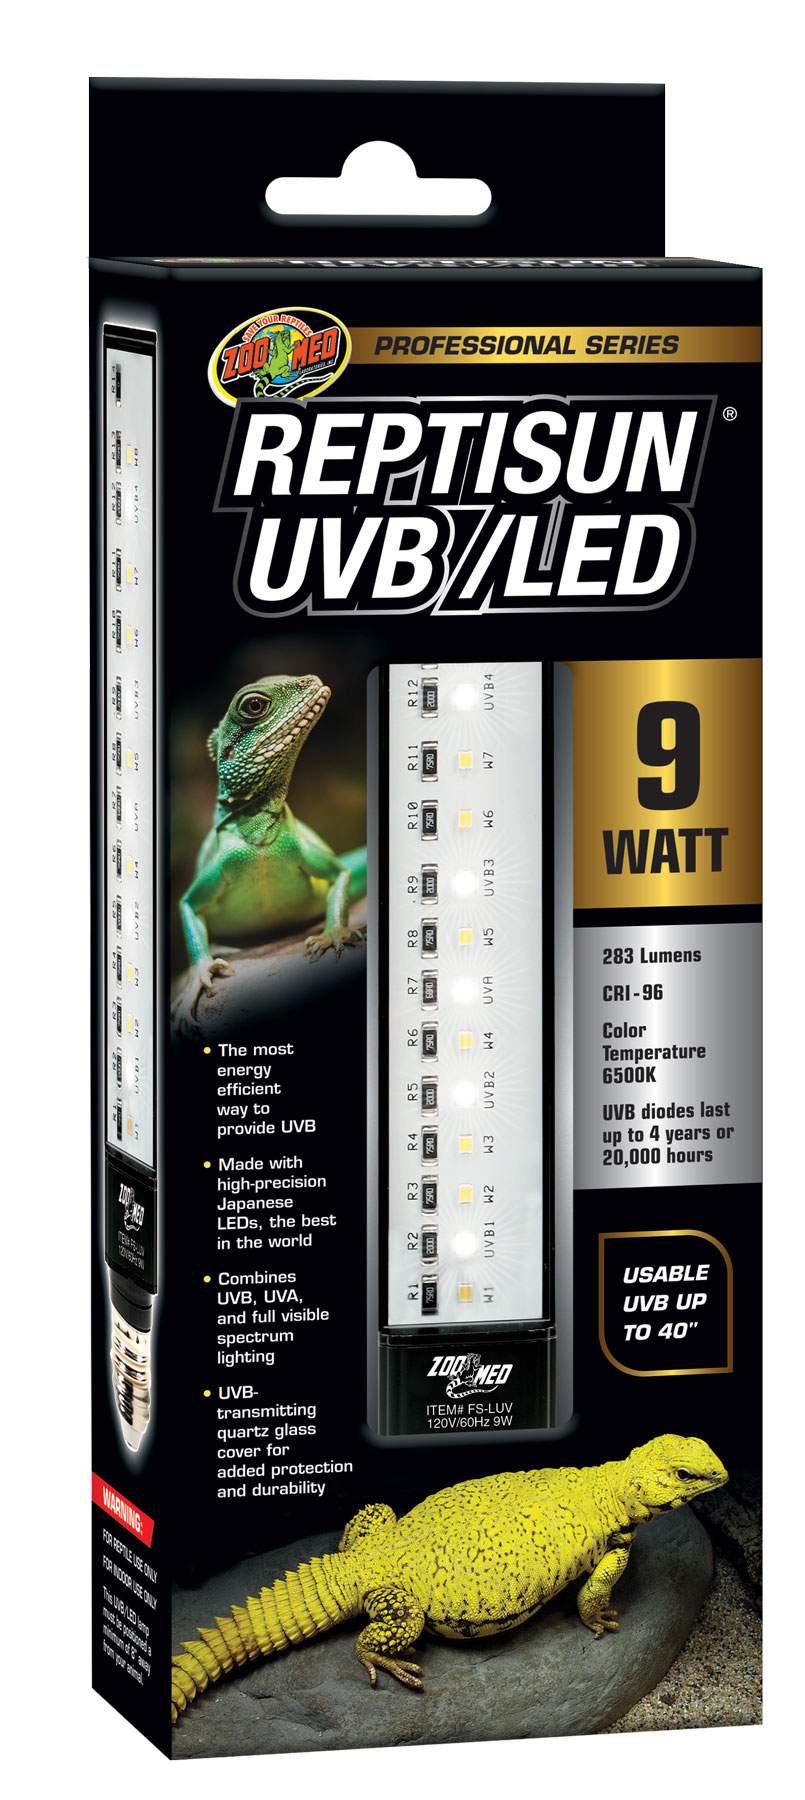 bit venom detekterbare ReptiSun® UVB/LED | Zoo Med Laboratories, Inc.